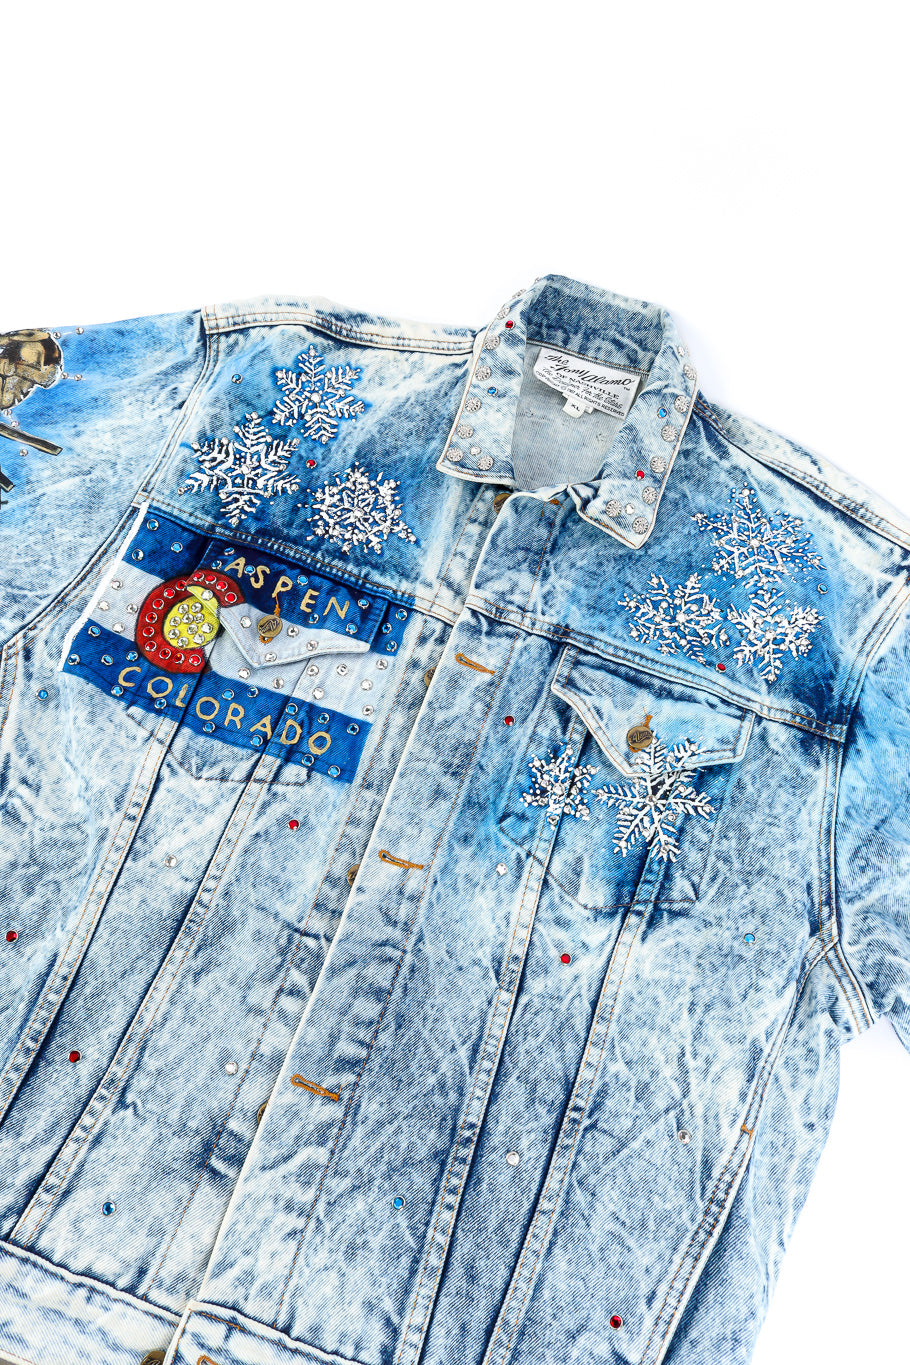 Aspen Colorado jacket by Tony Alamo flat lay close @recessla